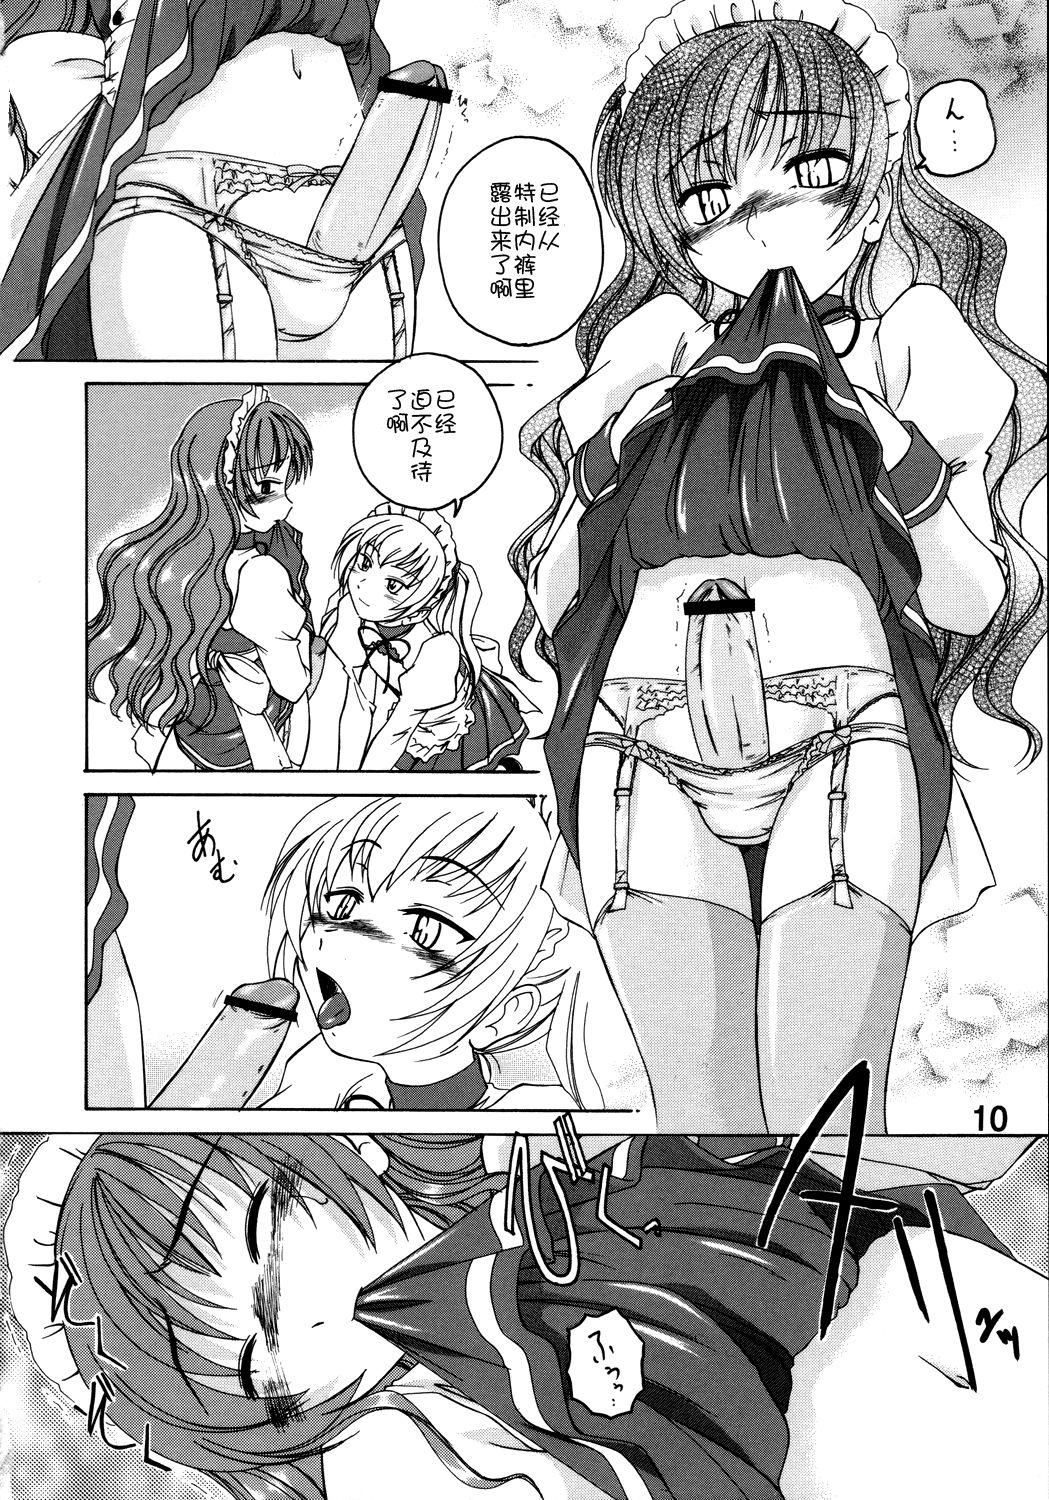 Sensual Manga Sangyou Haikibutsu 11 - Comic Industrial Wastes 11 - Princess princess Femdom Pov - Page 9